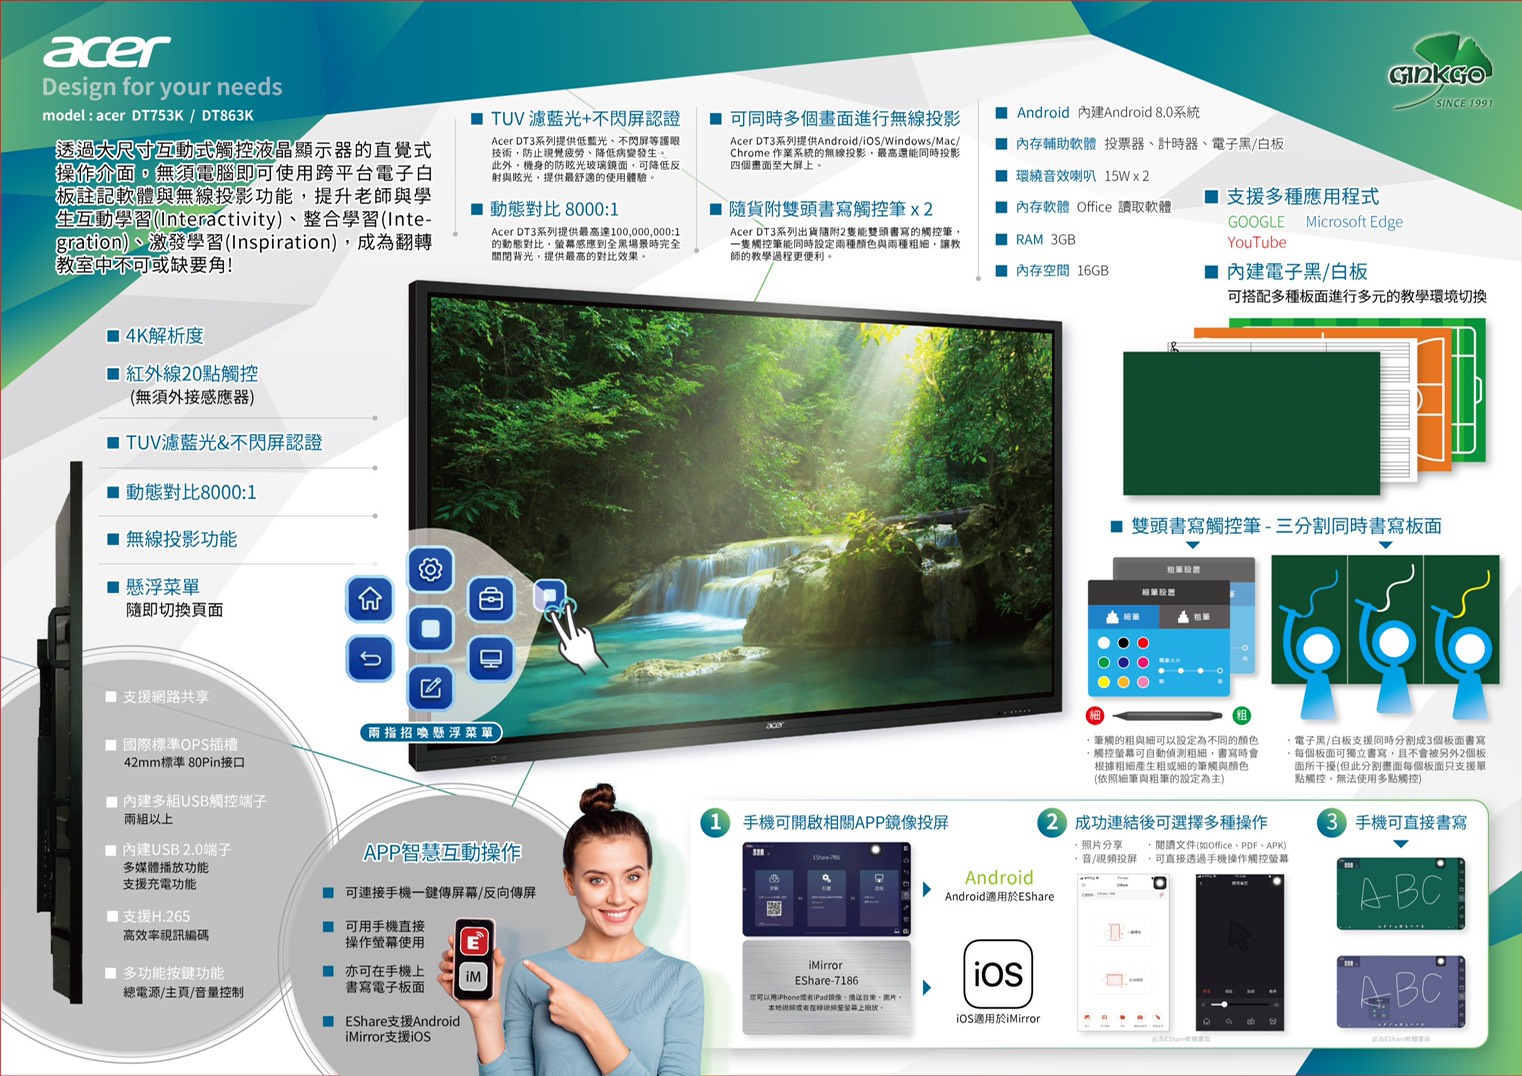 Acer 觸控電子白板IWB DT863K /DT753K